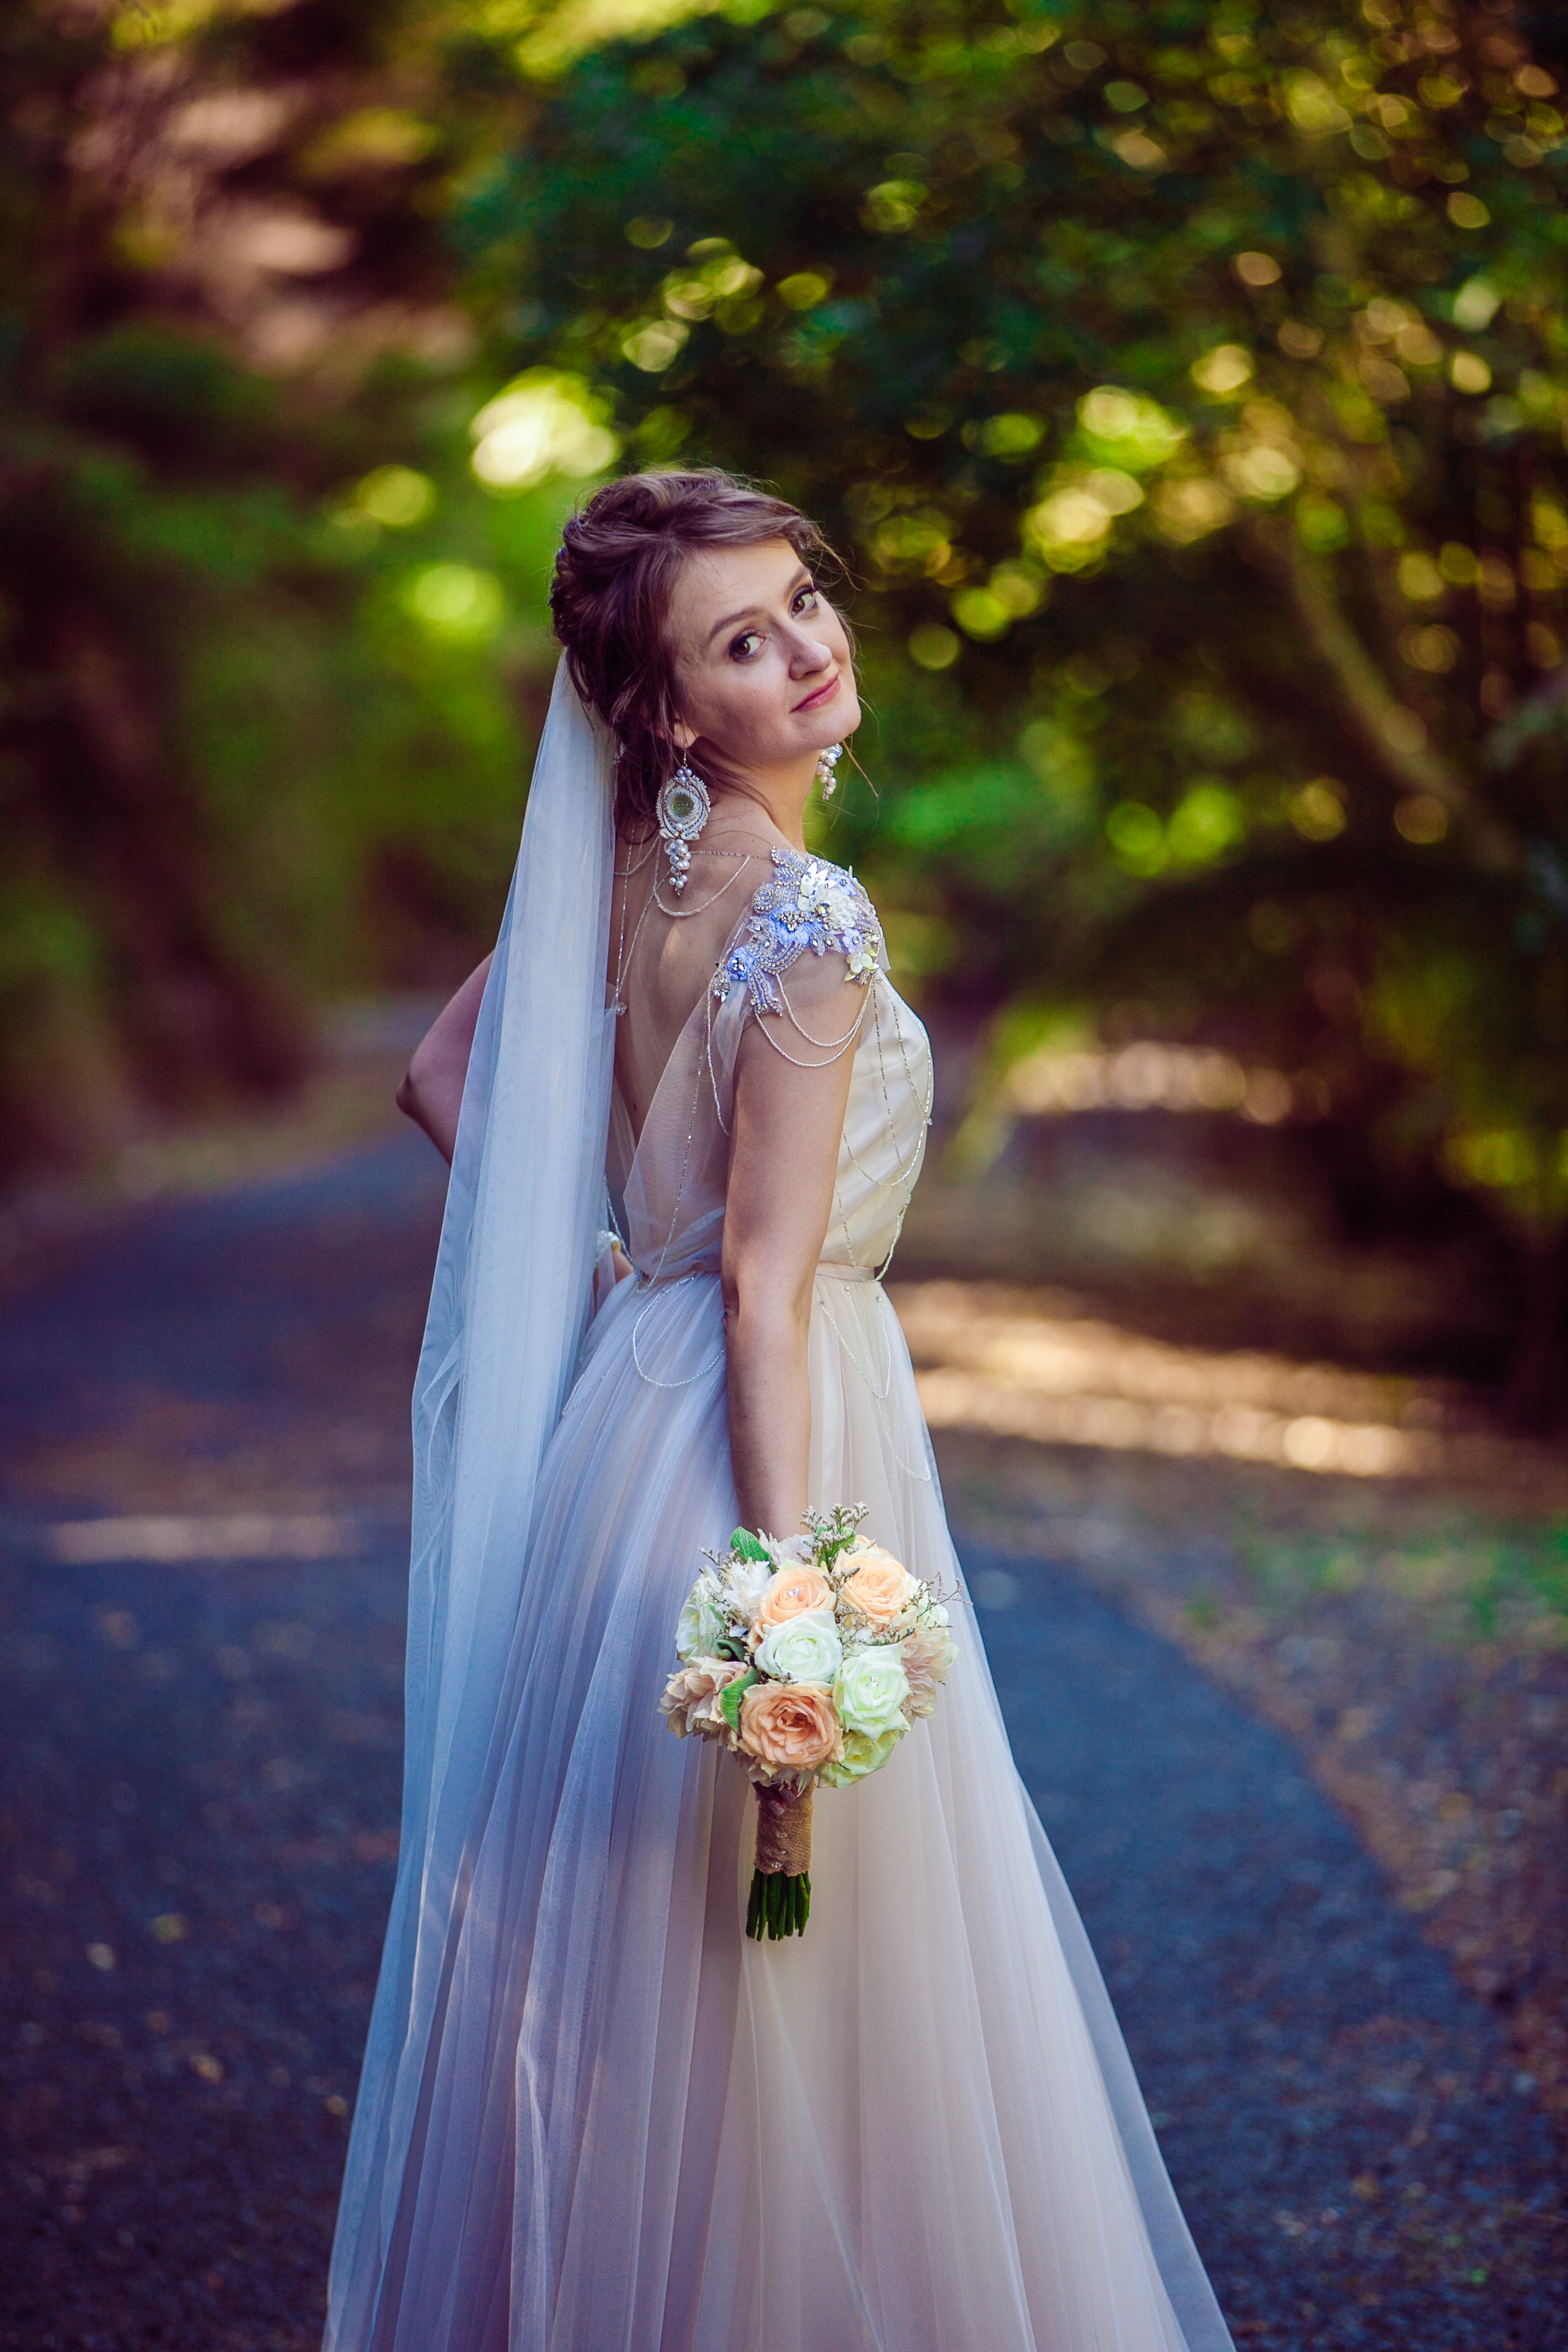 The gorgeous Bride